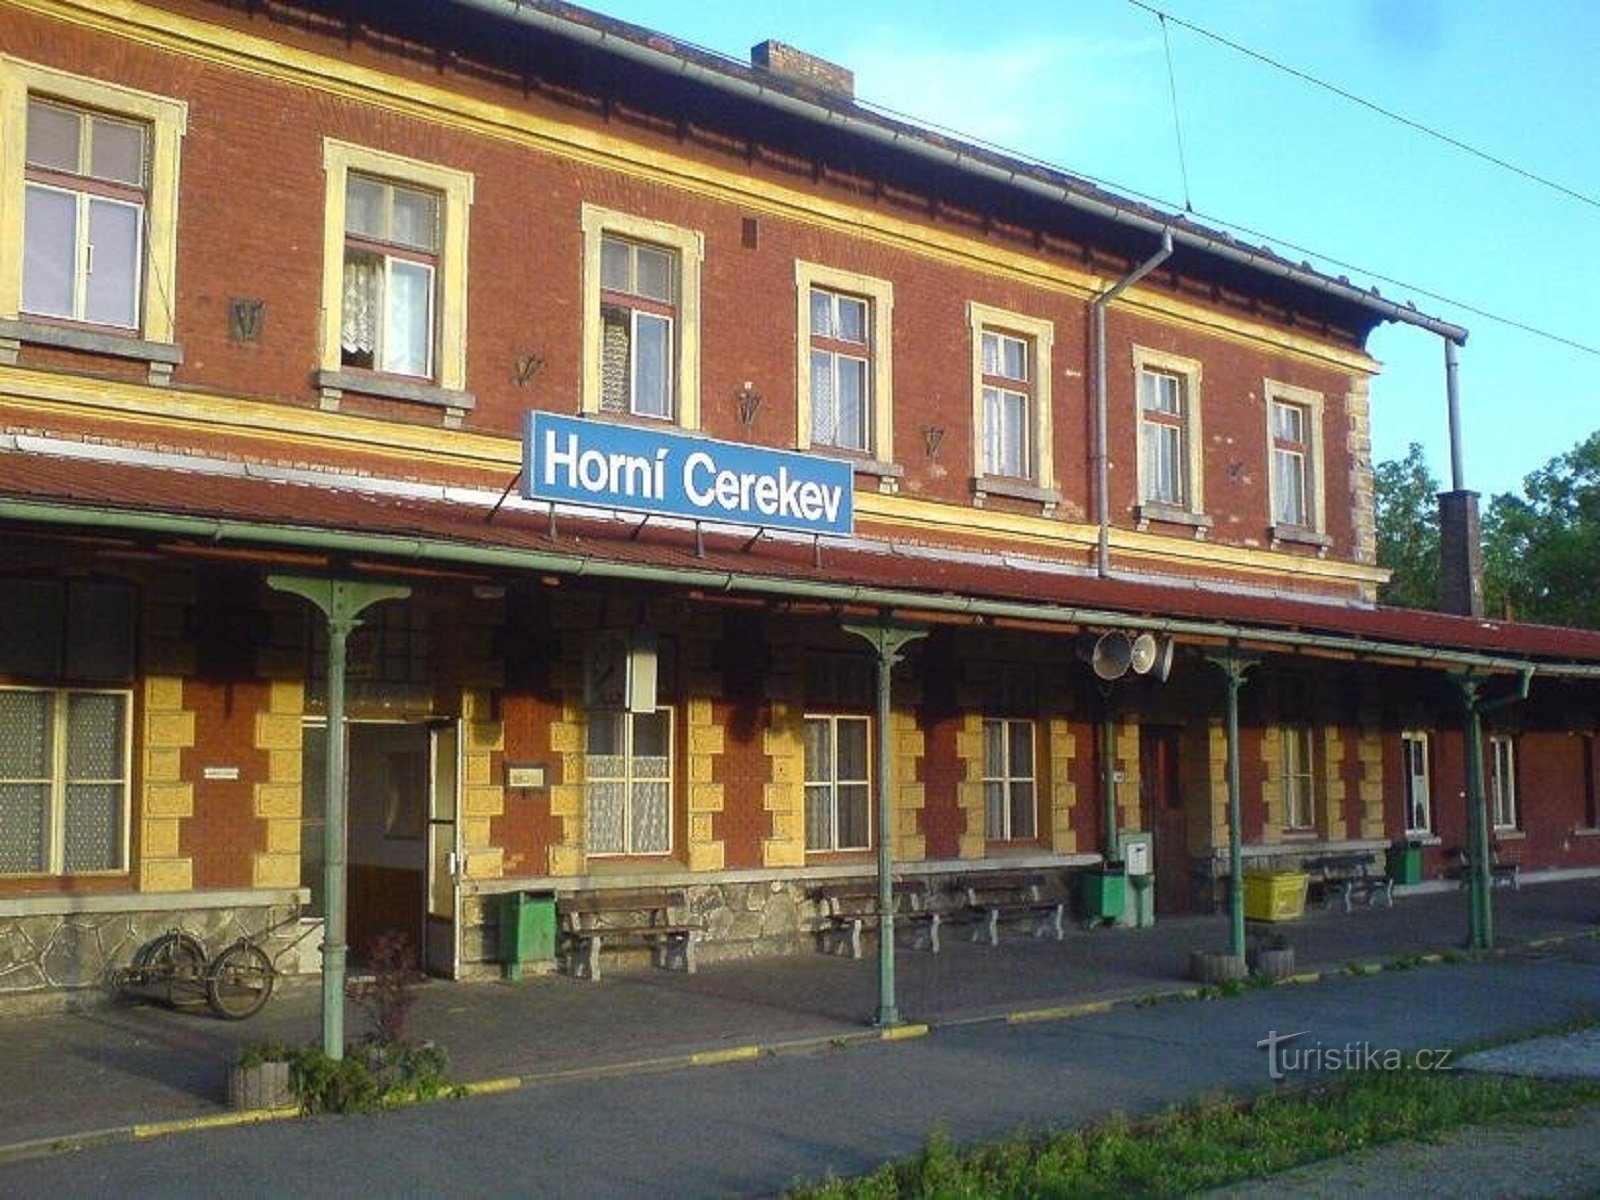 1. Horní Cerekv の鉄道駅。